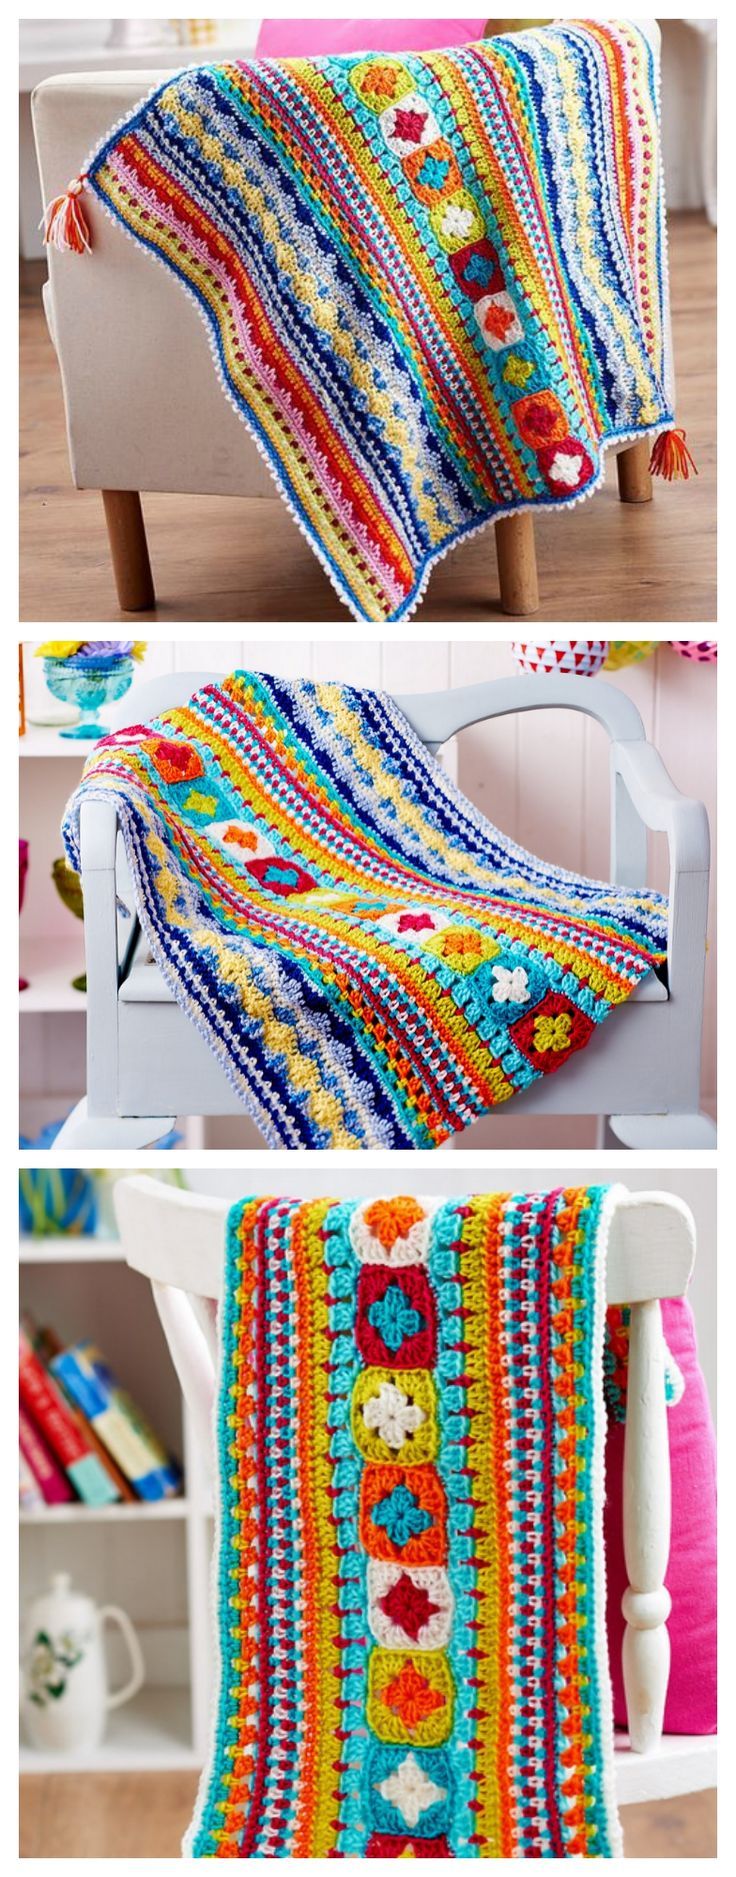 Sampler-Blanket-By-Janine-Holmes-Free-Crochet-Pattern-With.jpg